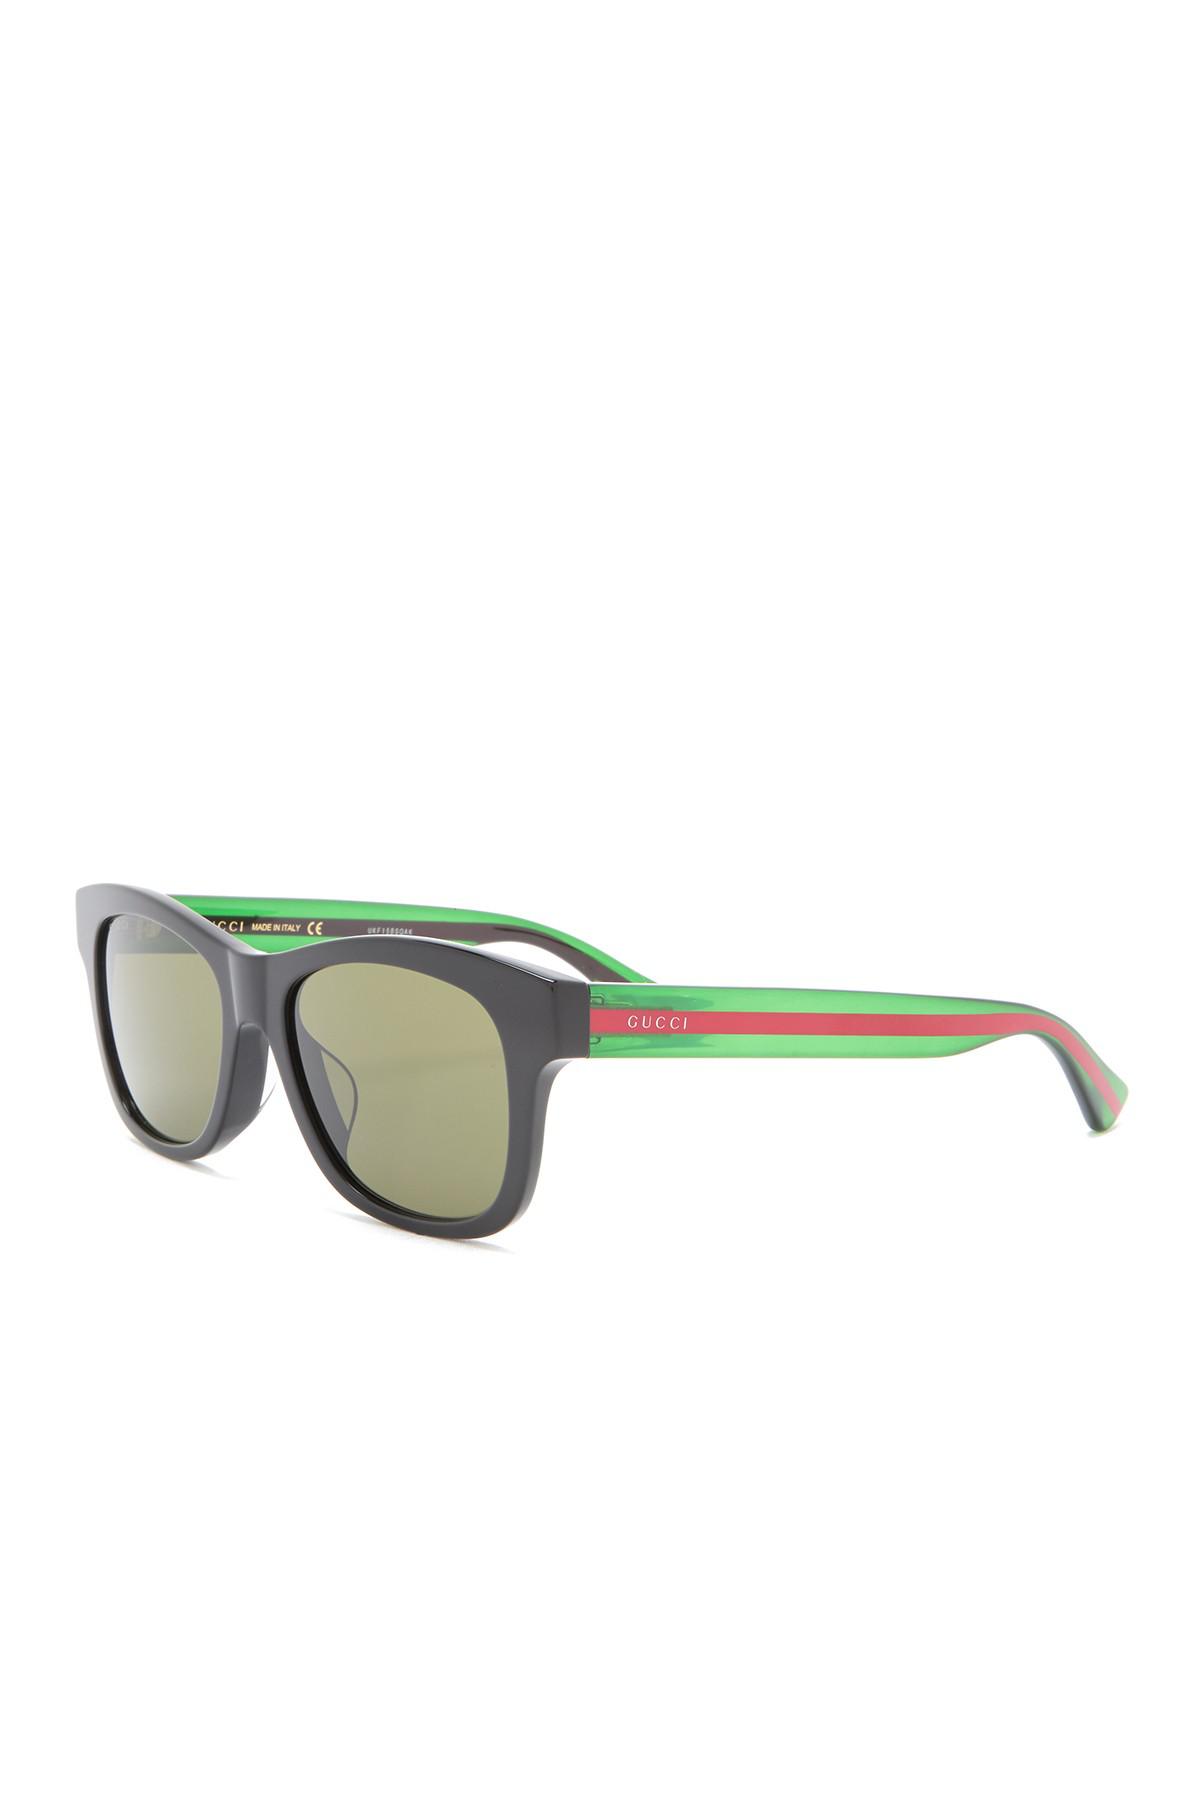 Gucci 53mm Rectangle Sunglasses in 